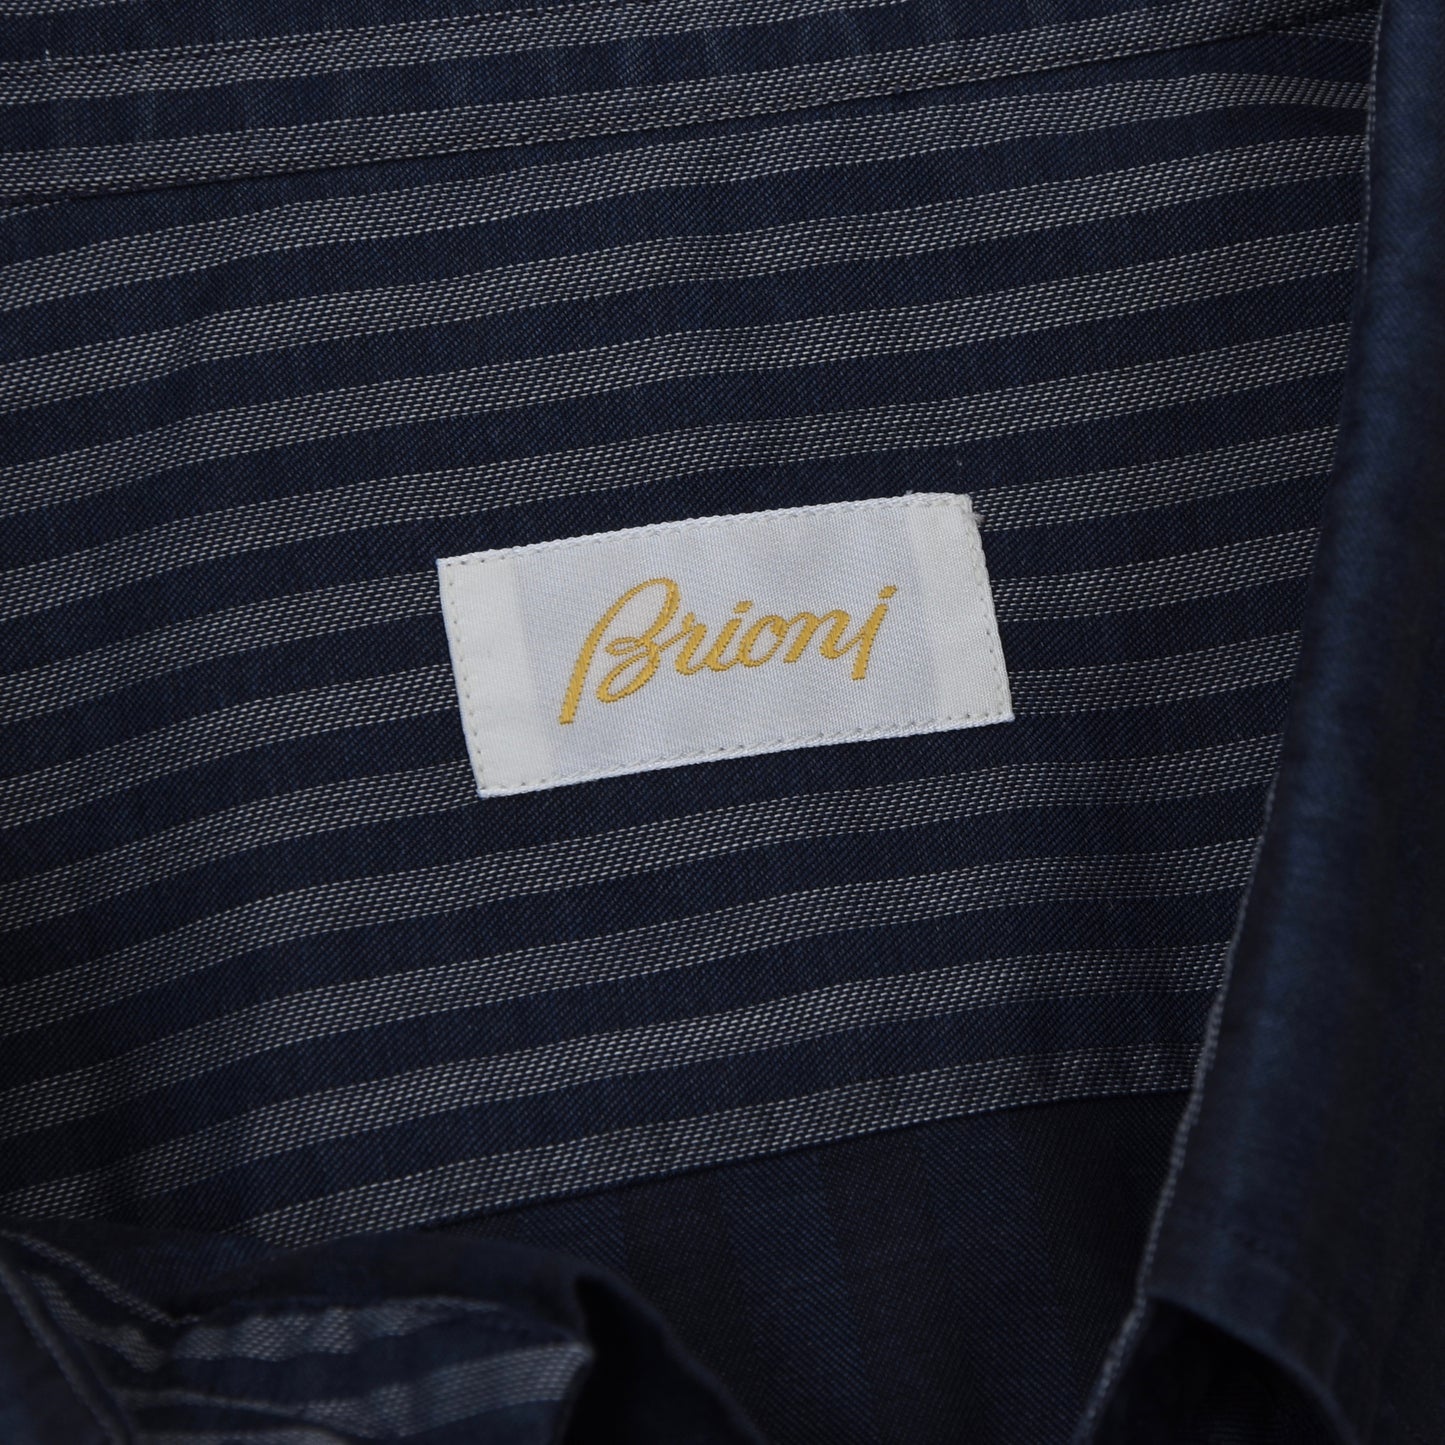 Brioni Cotton Shirt Size Size V - Striped